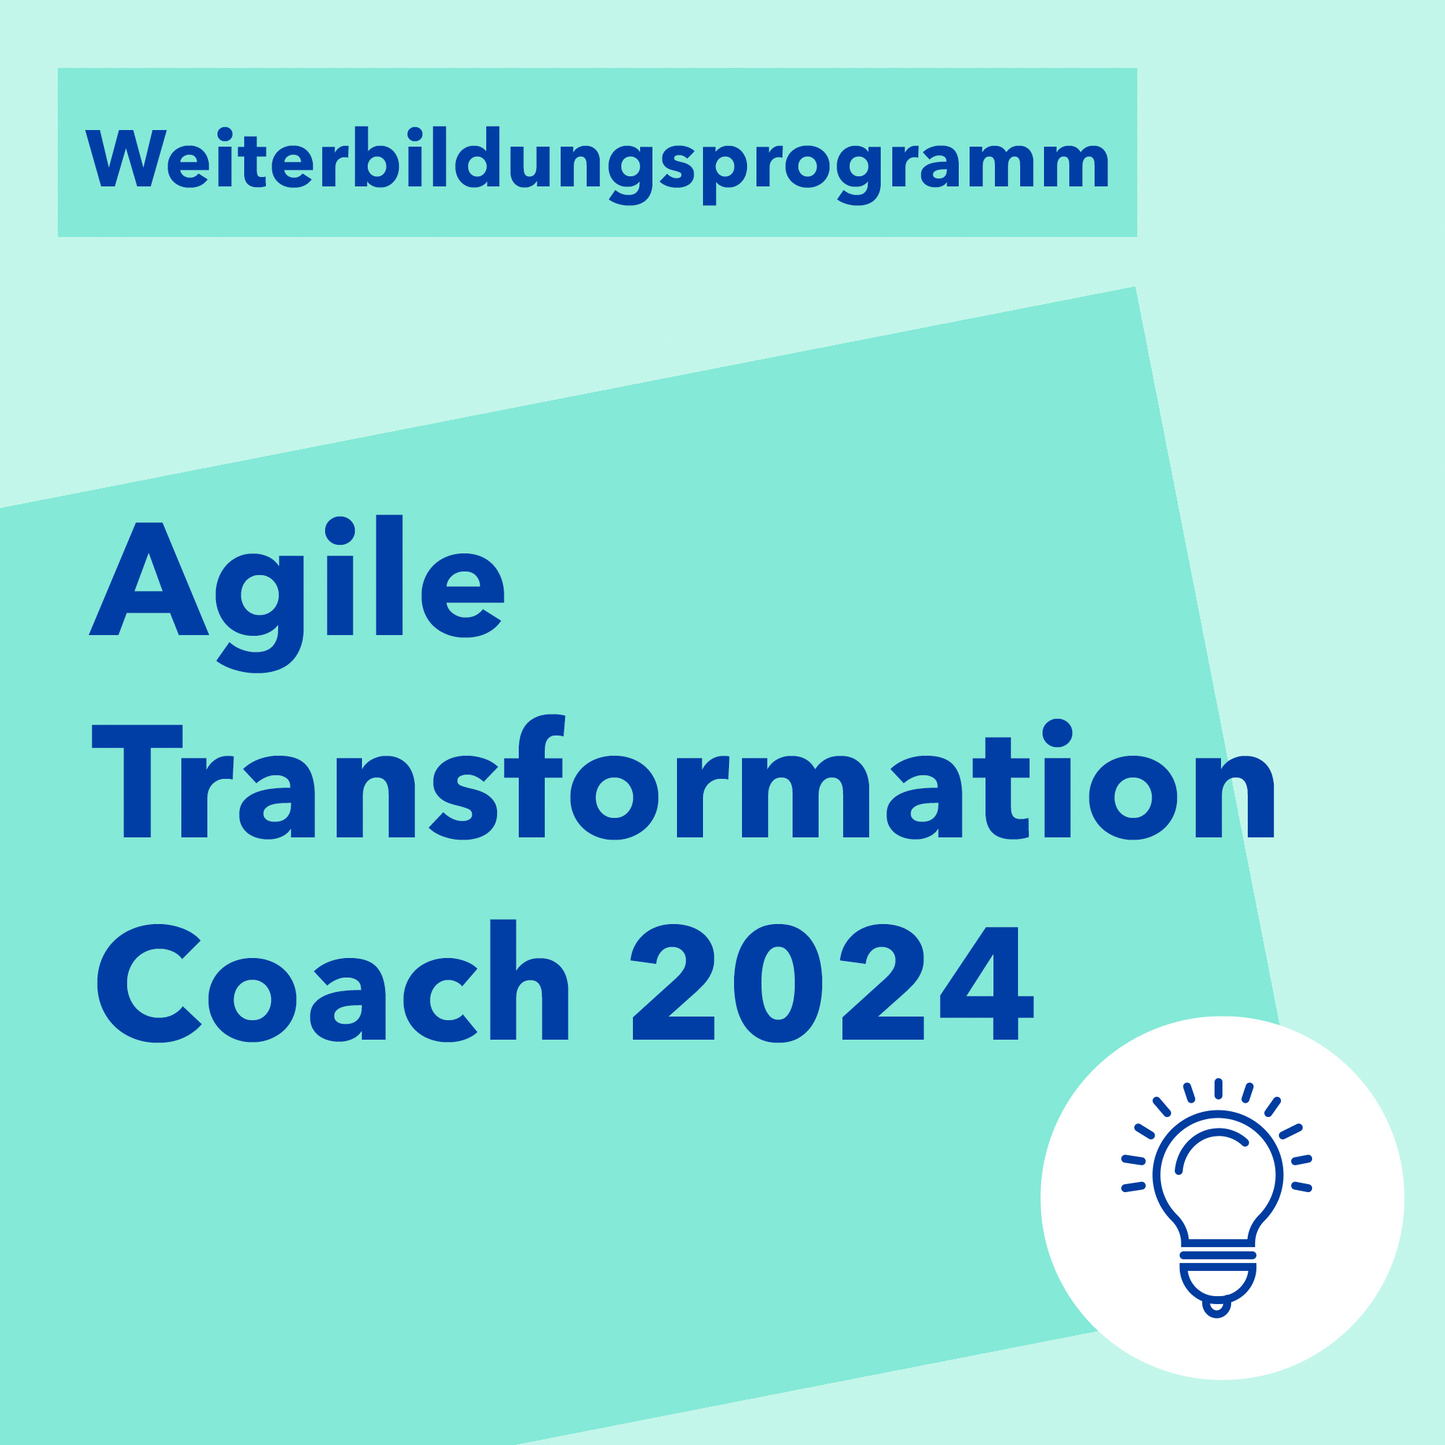 Agile Transformation Coach 2024